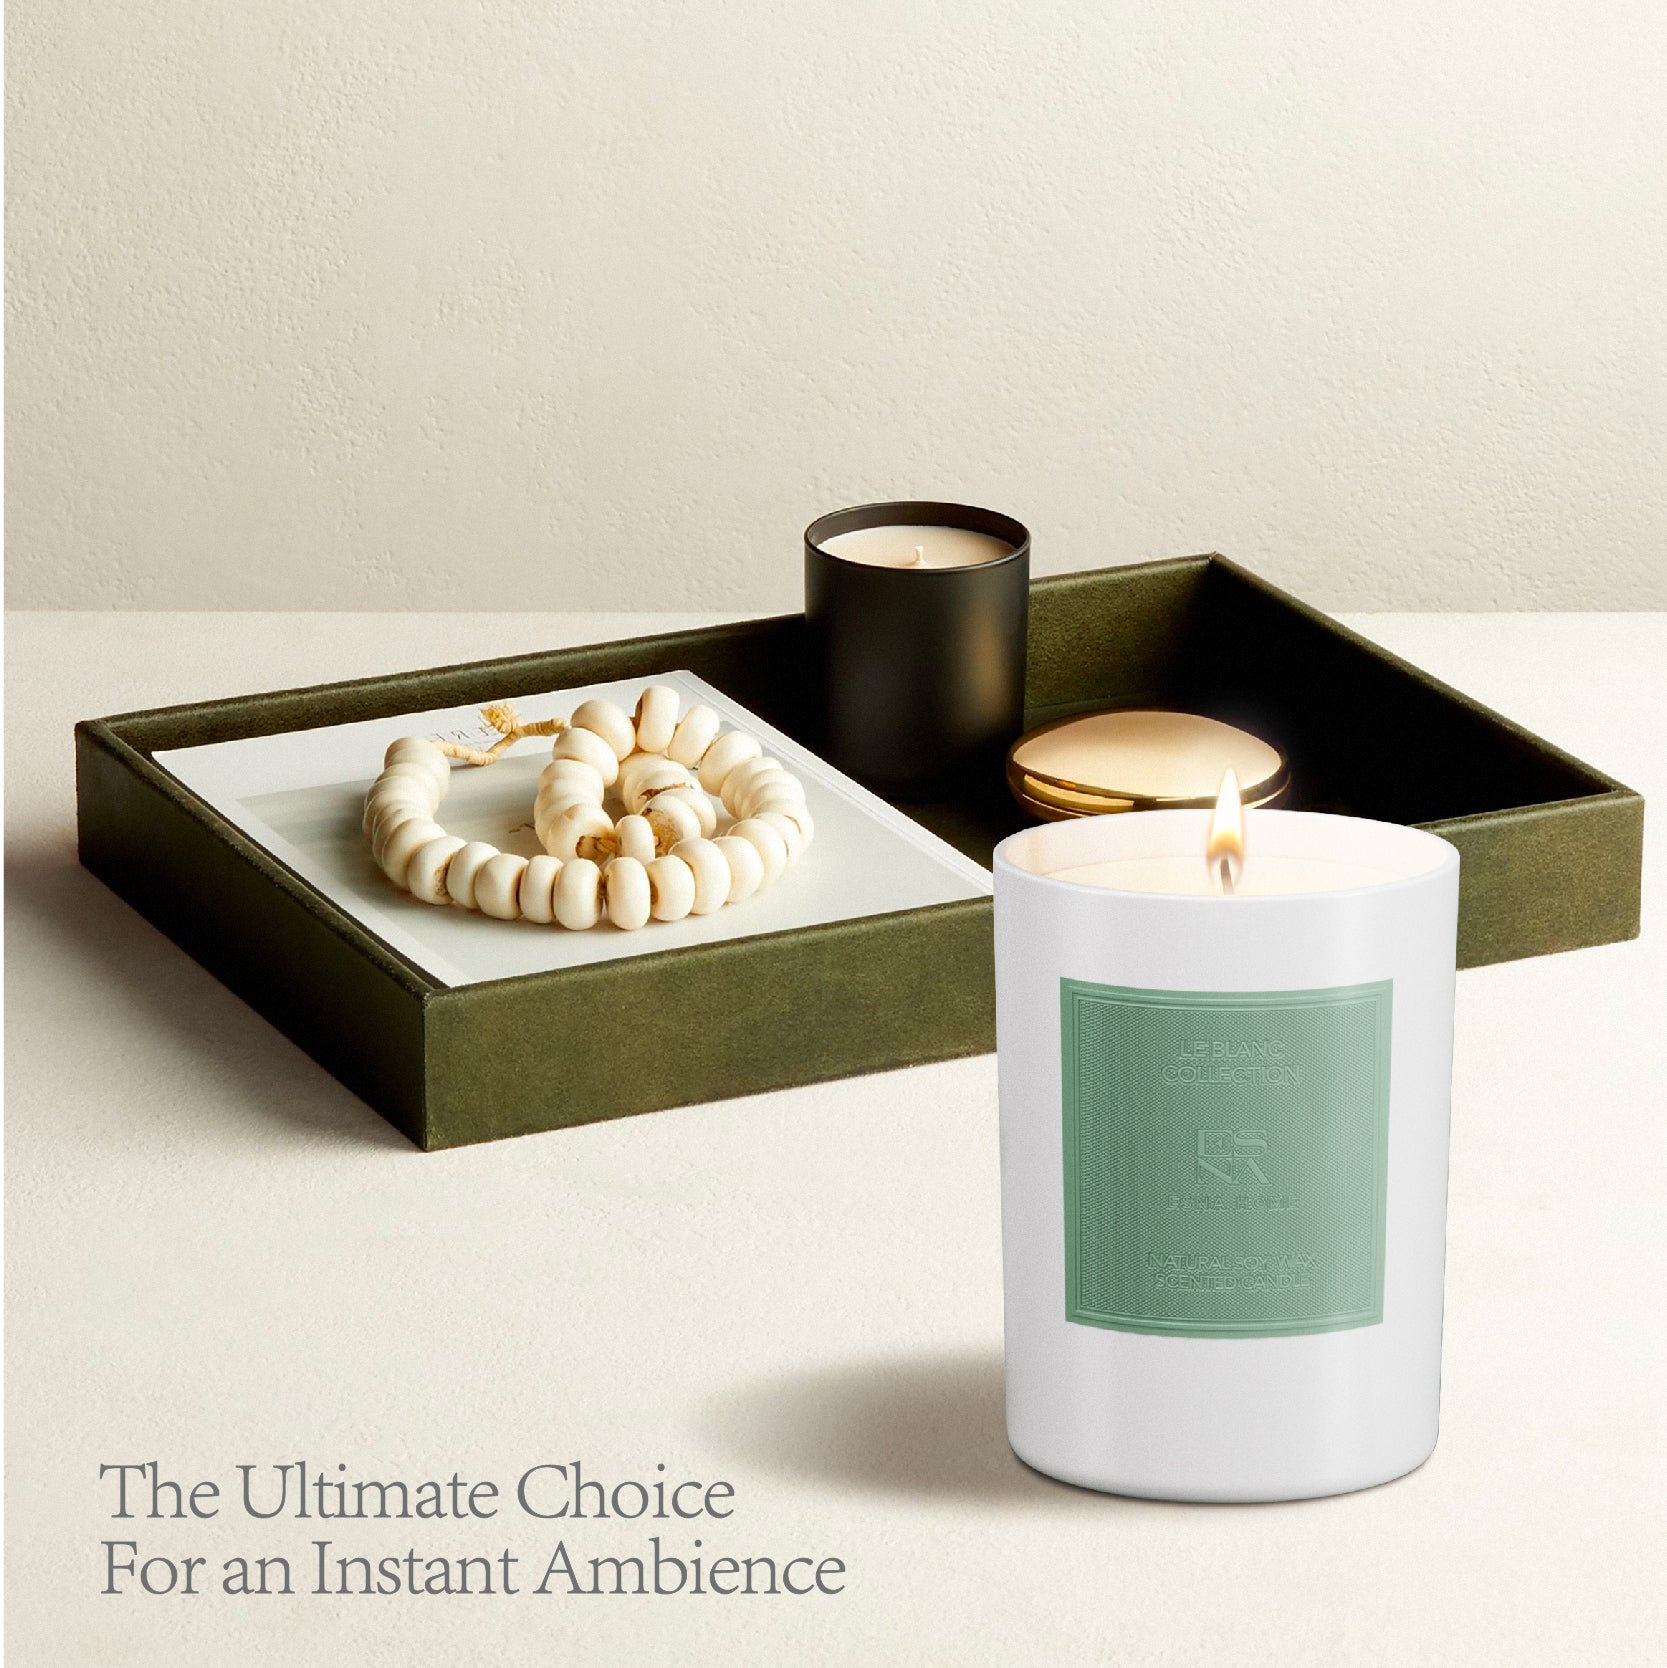 Zen Garden Scented Candle  |  Le Blanc Collection